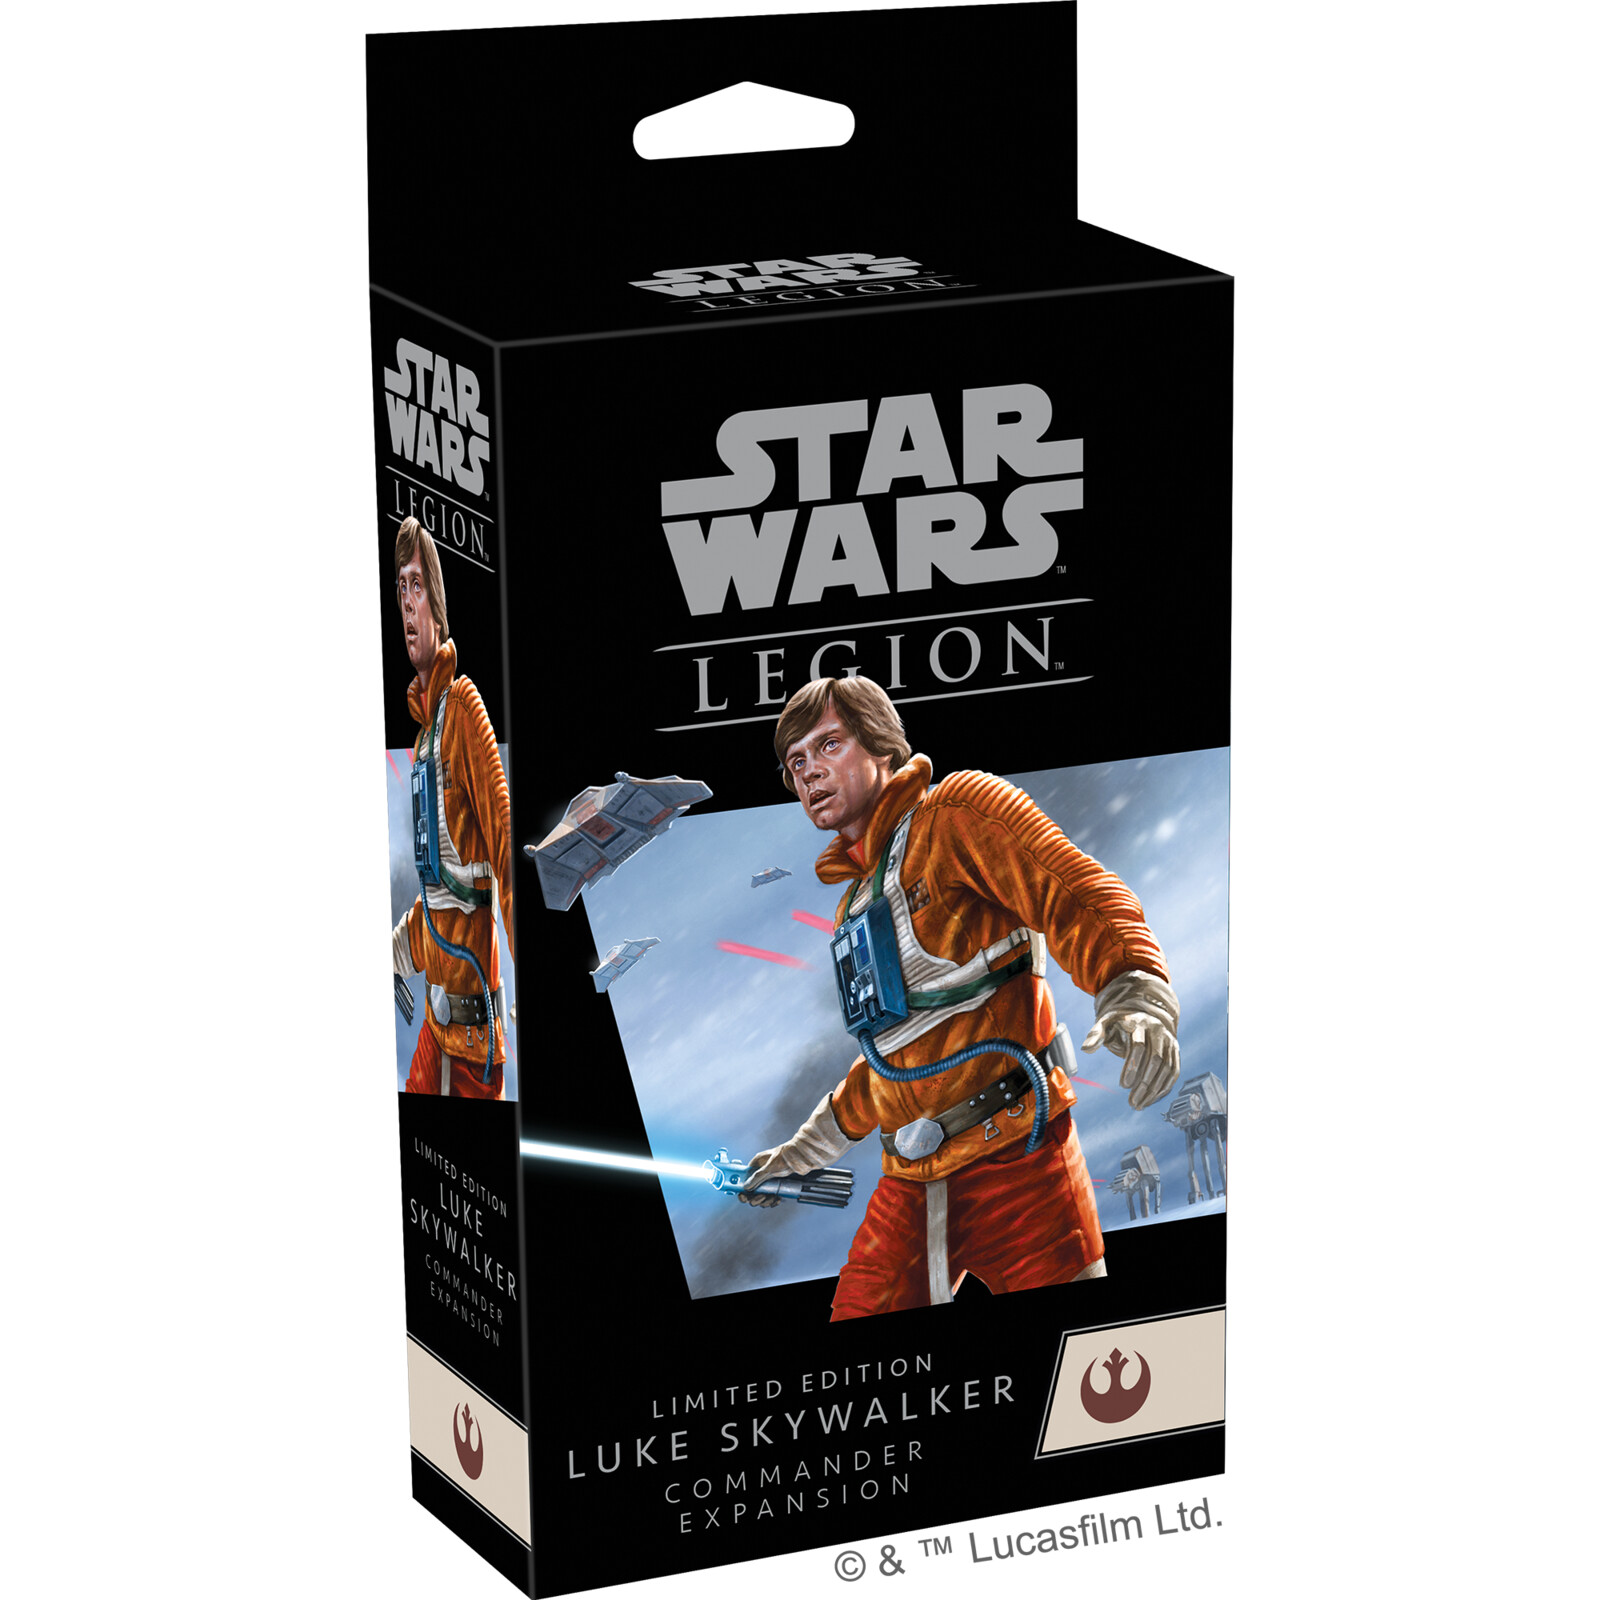 Star Wars Legion - Special Edition Luke Skywalker Commander